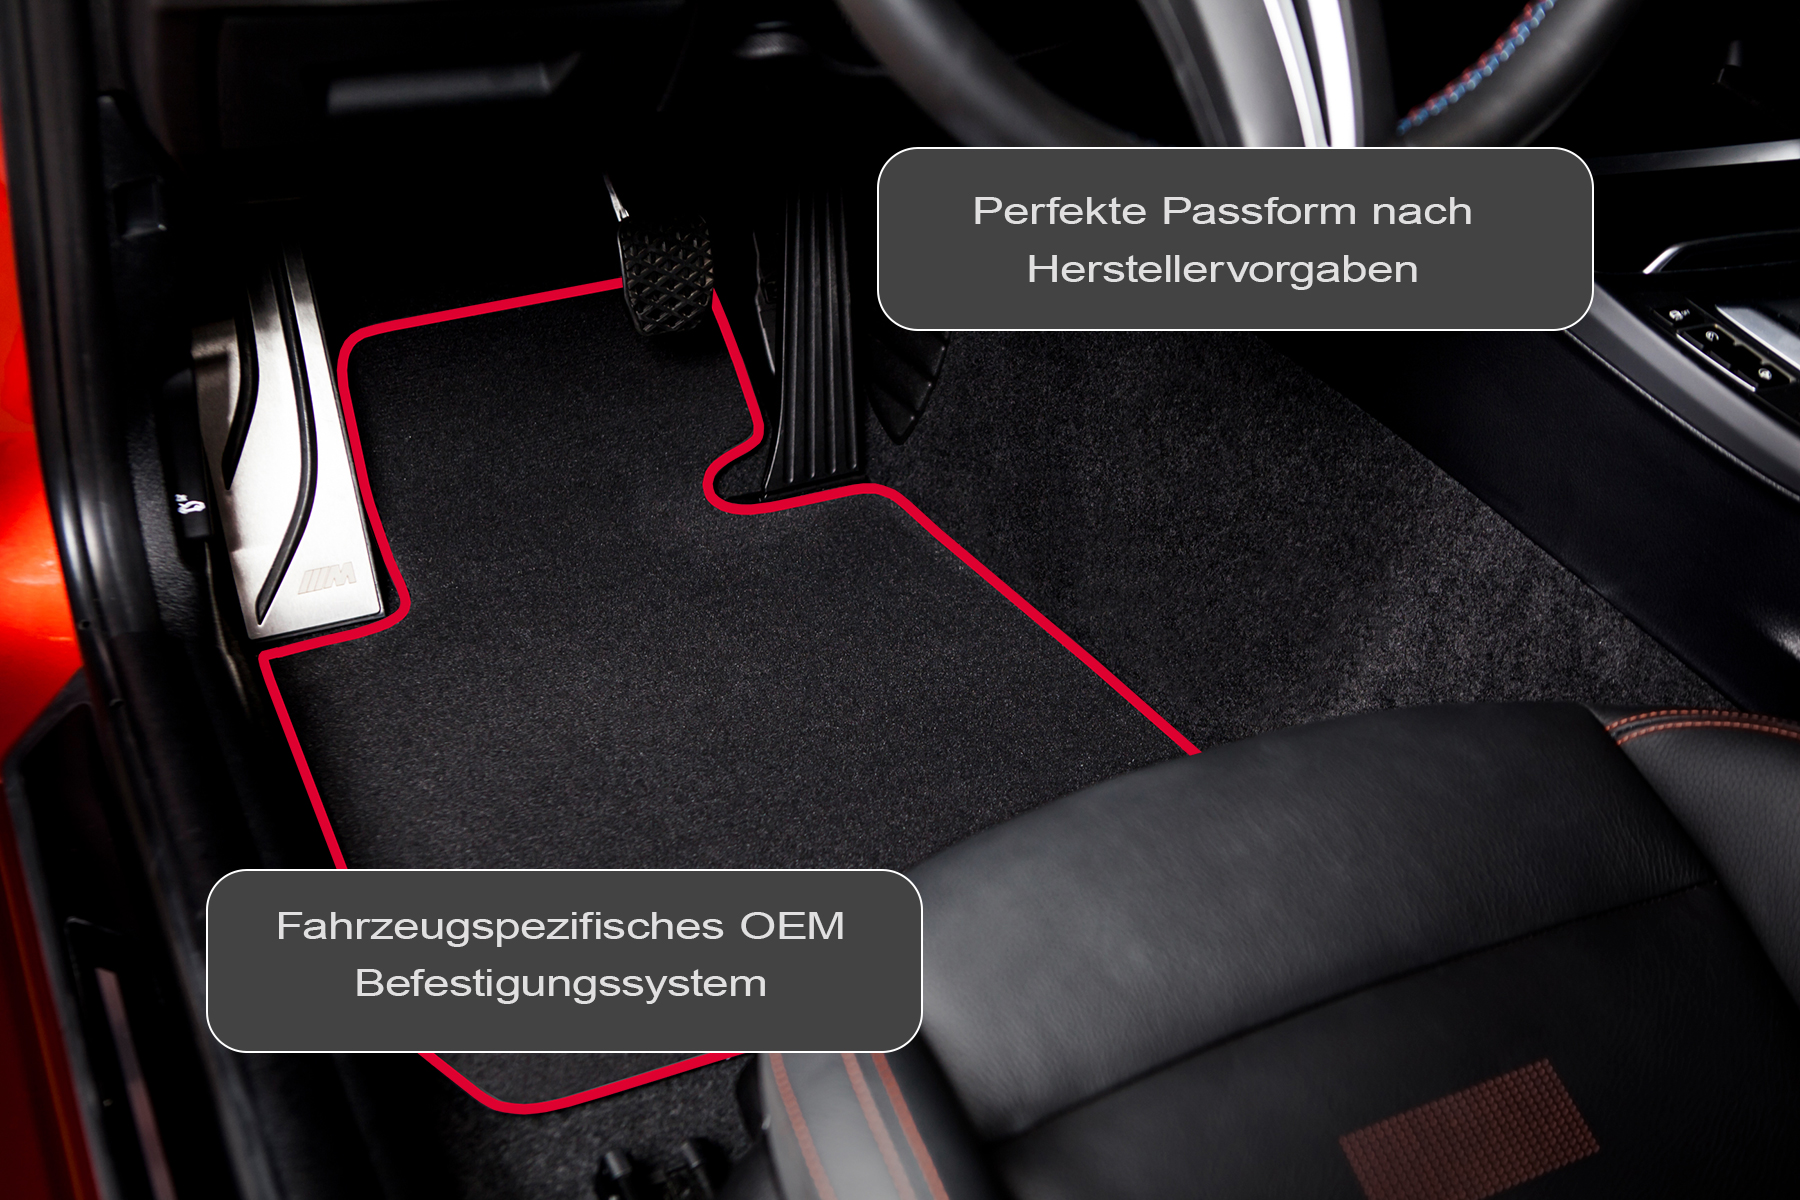 Exclusive Line Fußmatten für Audi Q7 4L Quattro S-Line Bj. 2006-06/2015